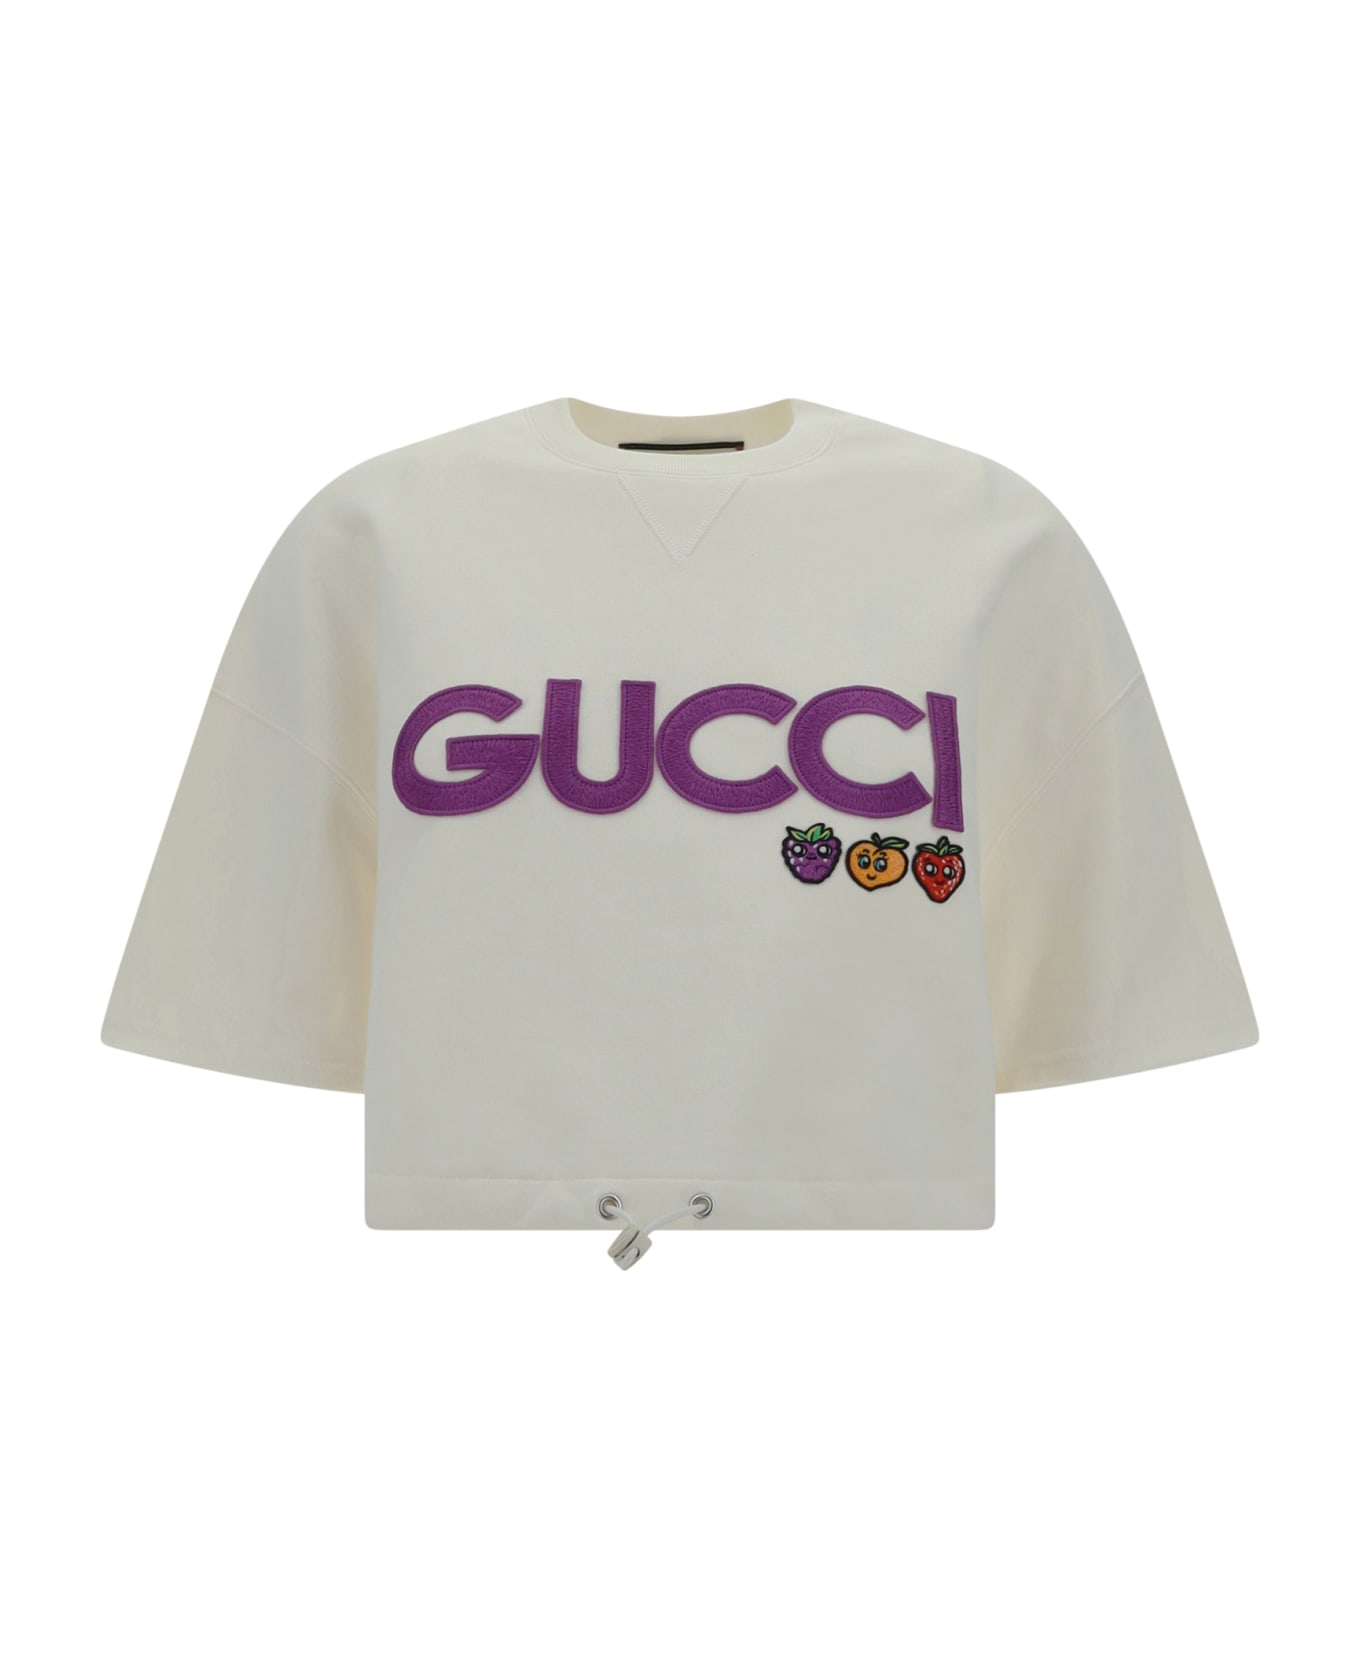 Gucci ring Sweatshirt - Sunlight/mix